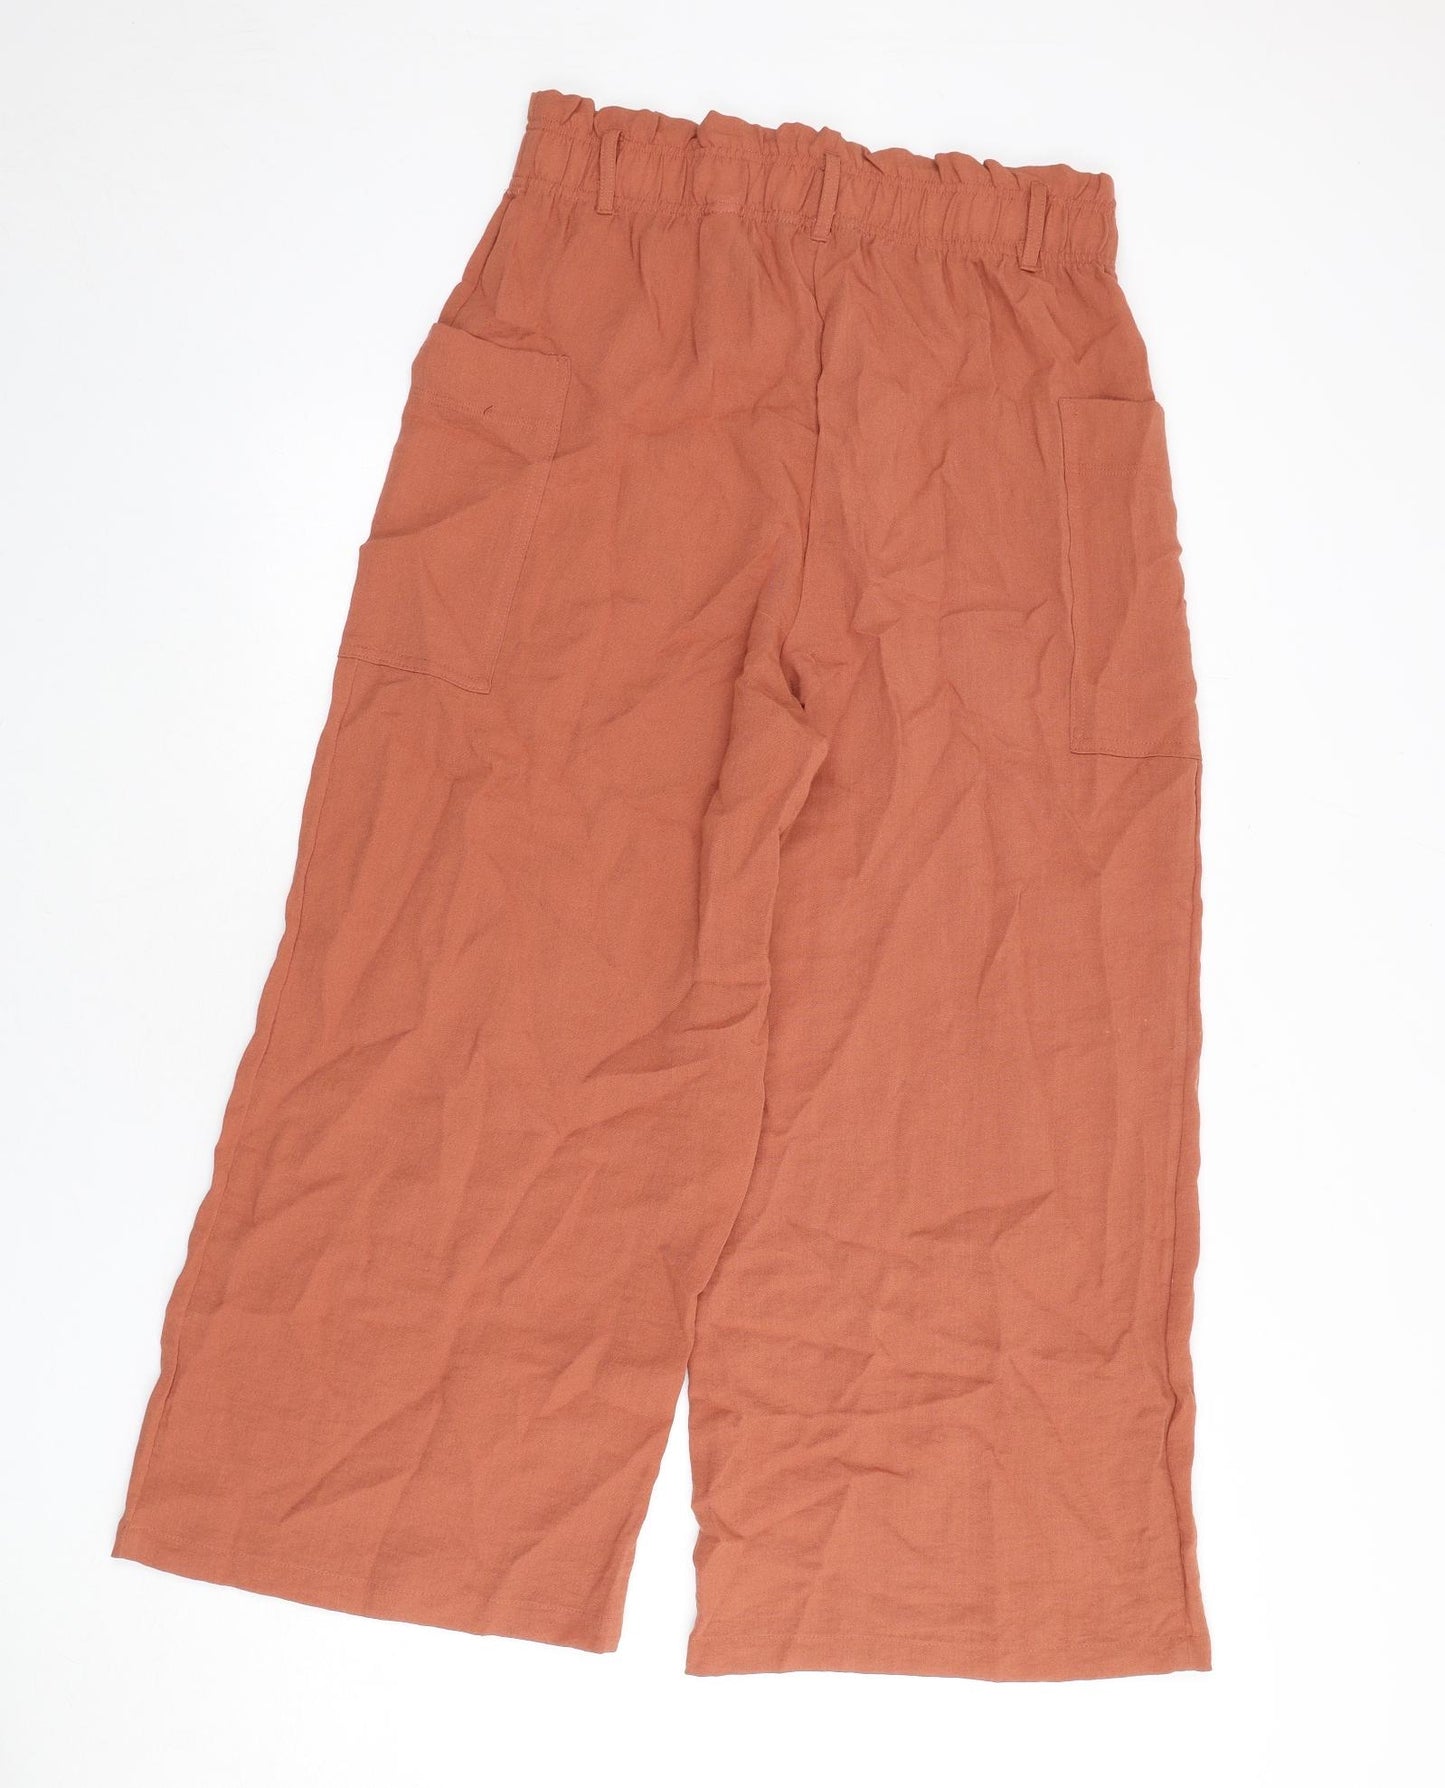 NEXT Womens Orange Viscose Trousers Size 14 L25 in Regular - Paperbag Waist